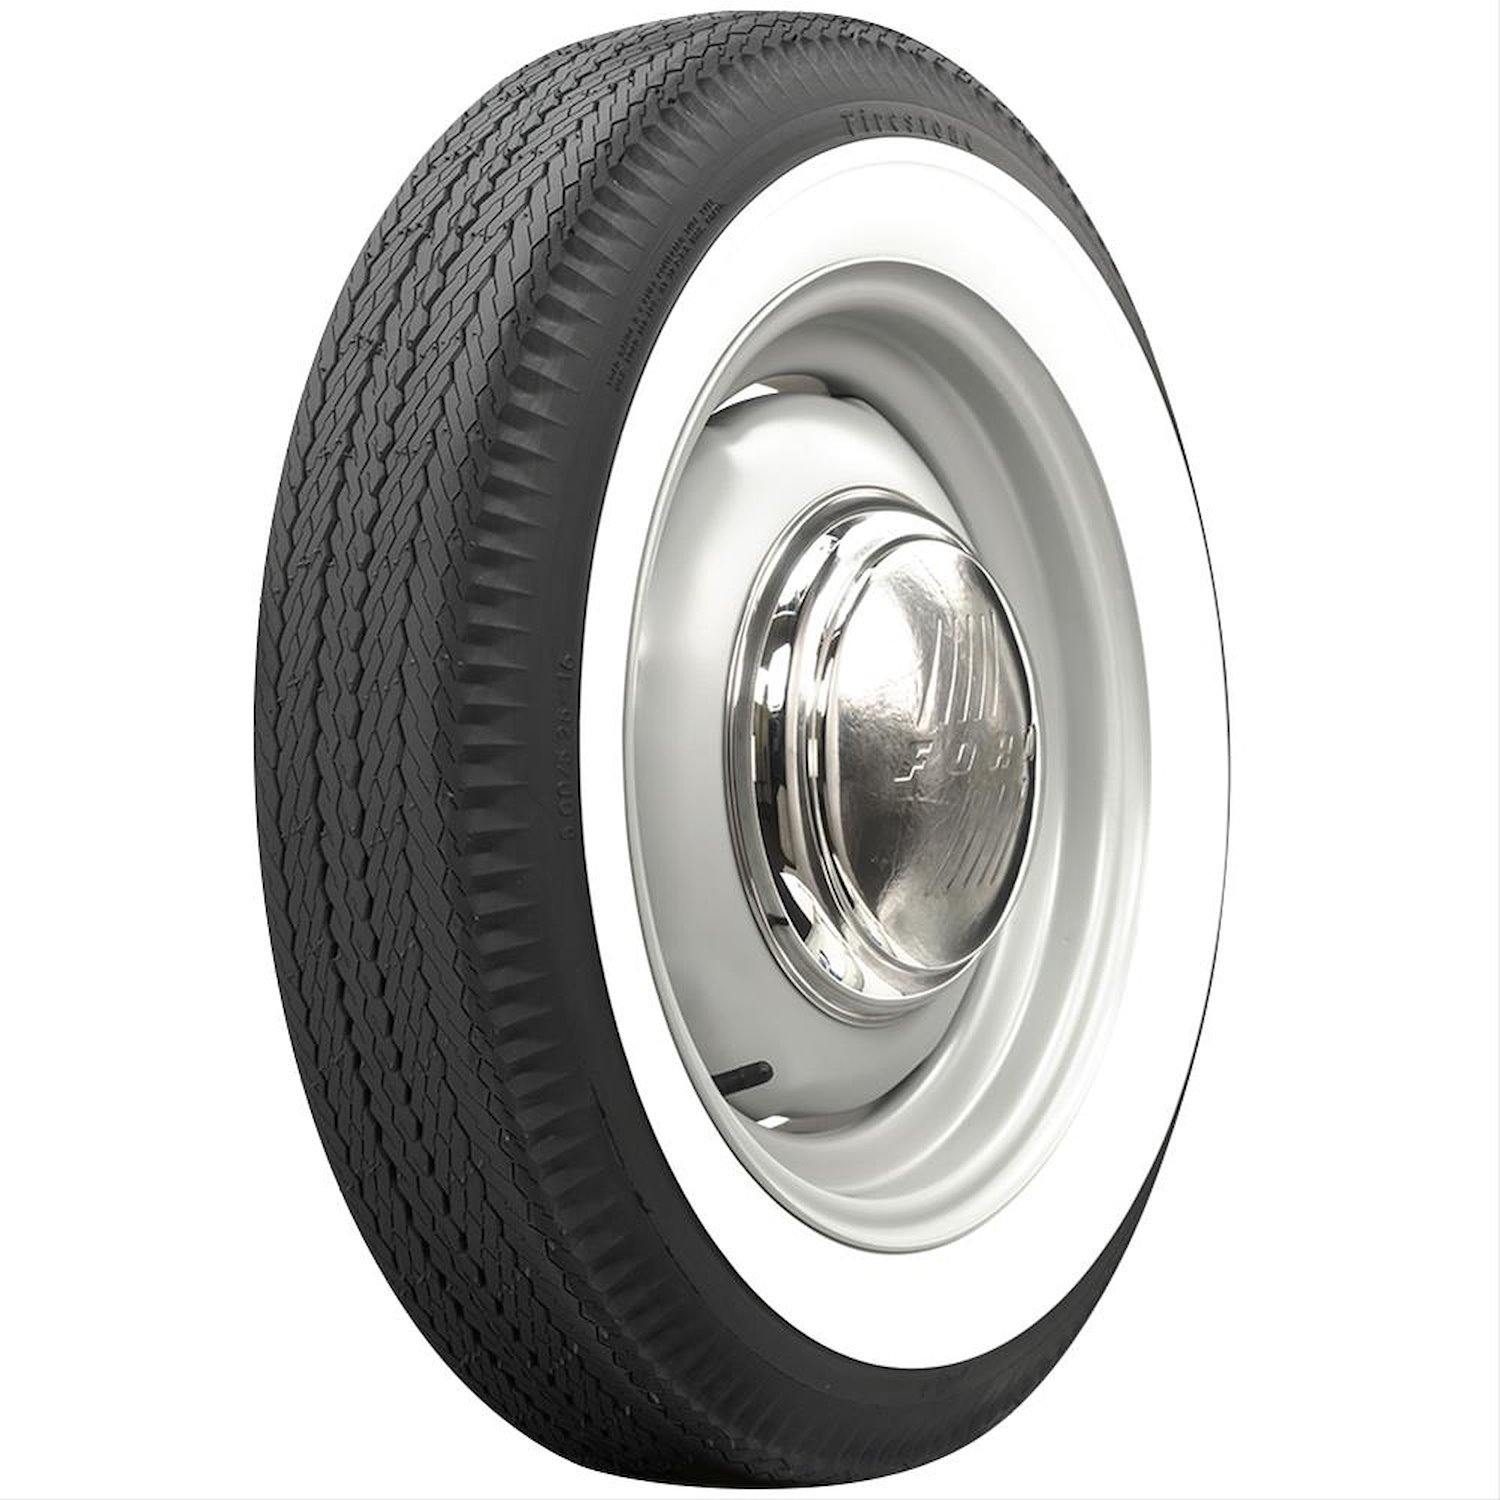 566053 Tire, Firestone 2.75-Inch Whitewall, 640-15